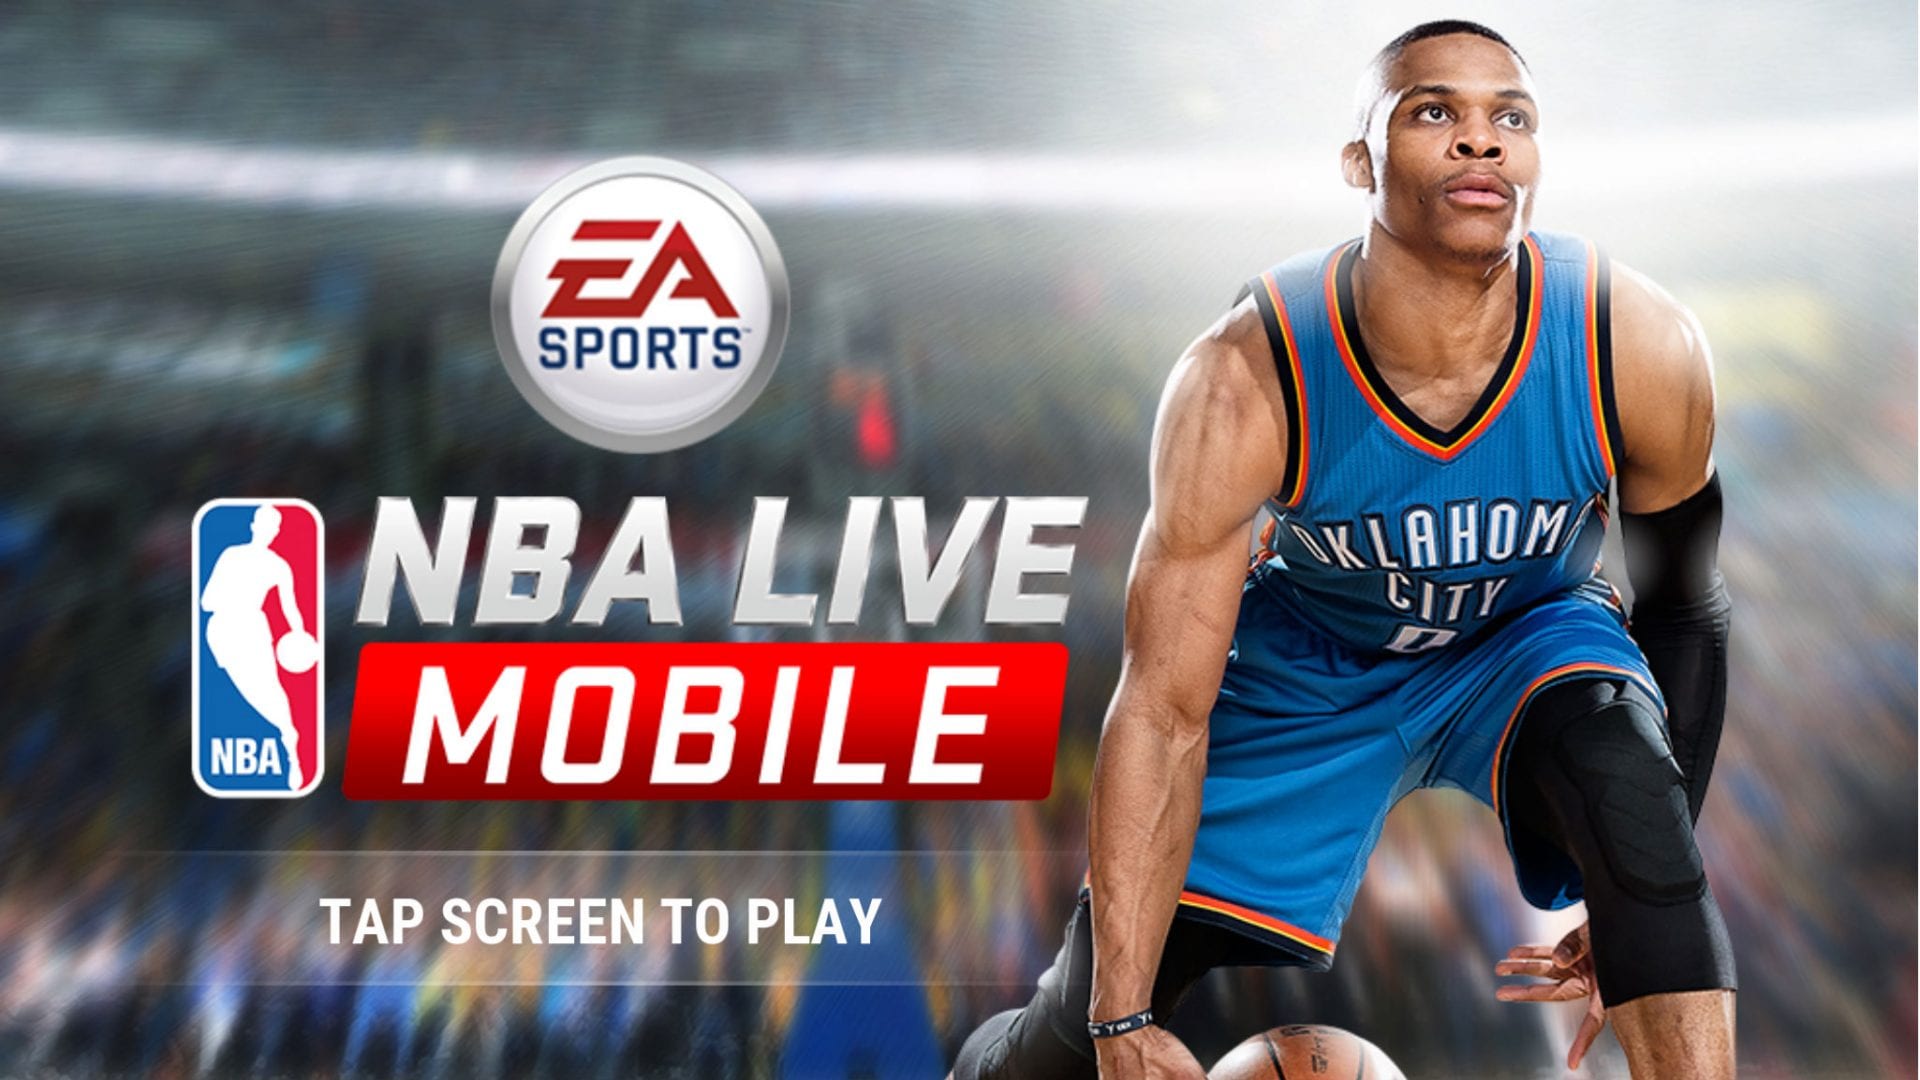 NBA live mobile is a mobile game program Peatix